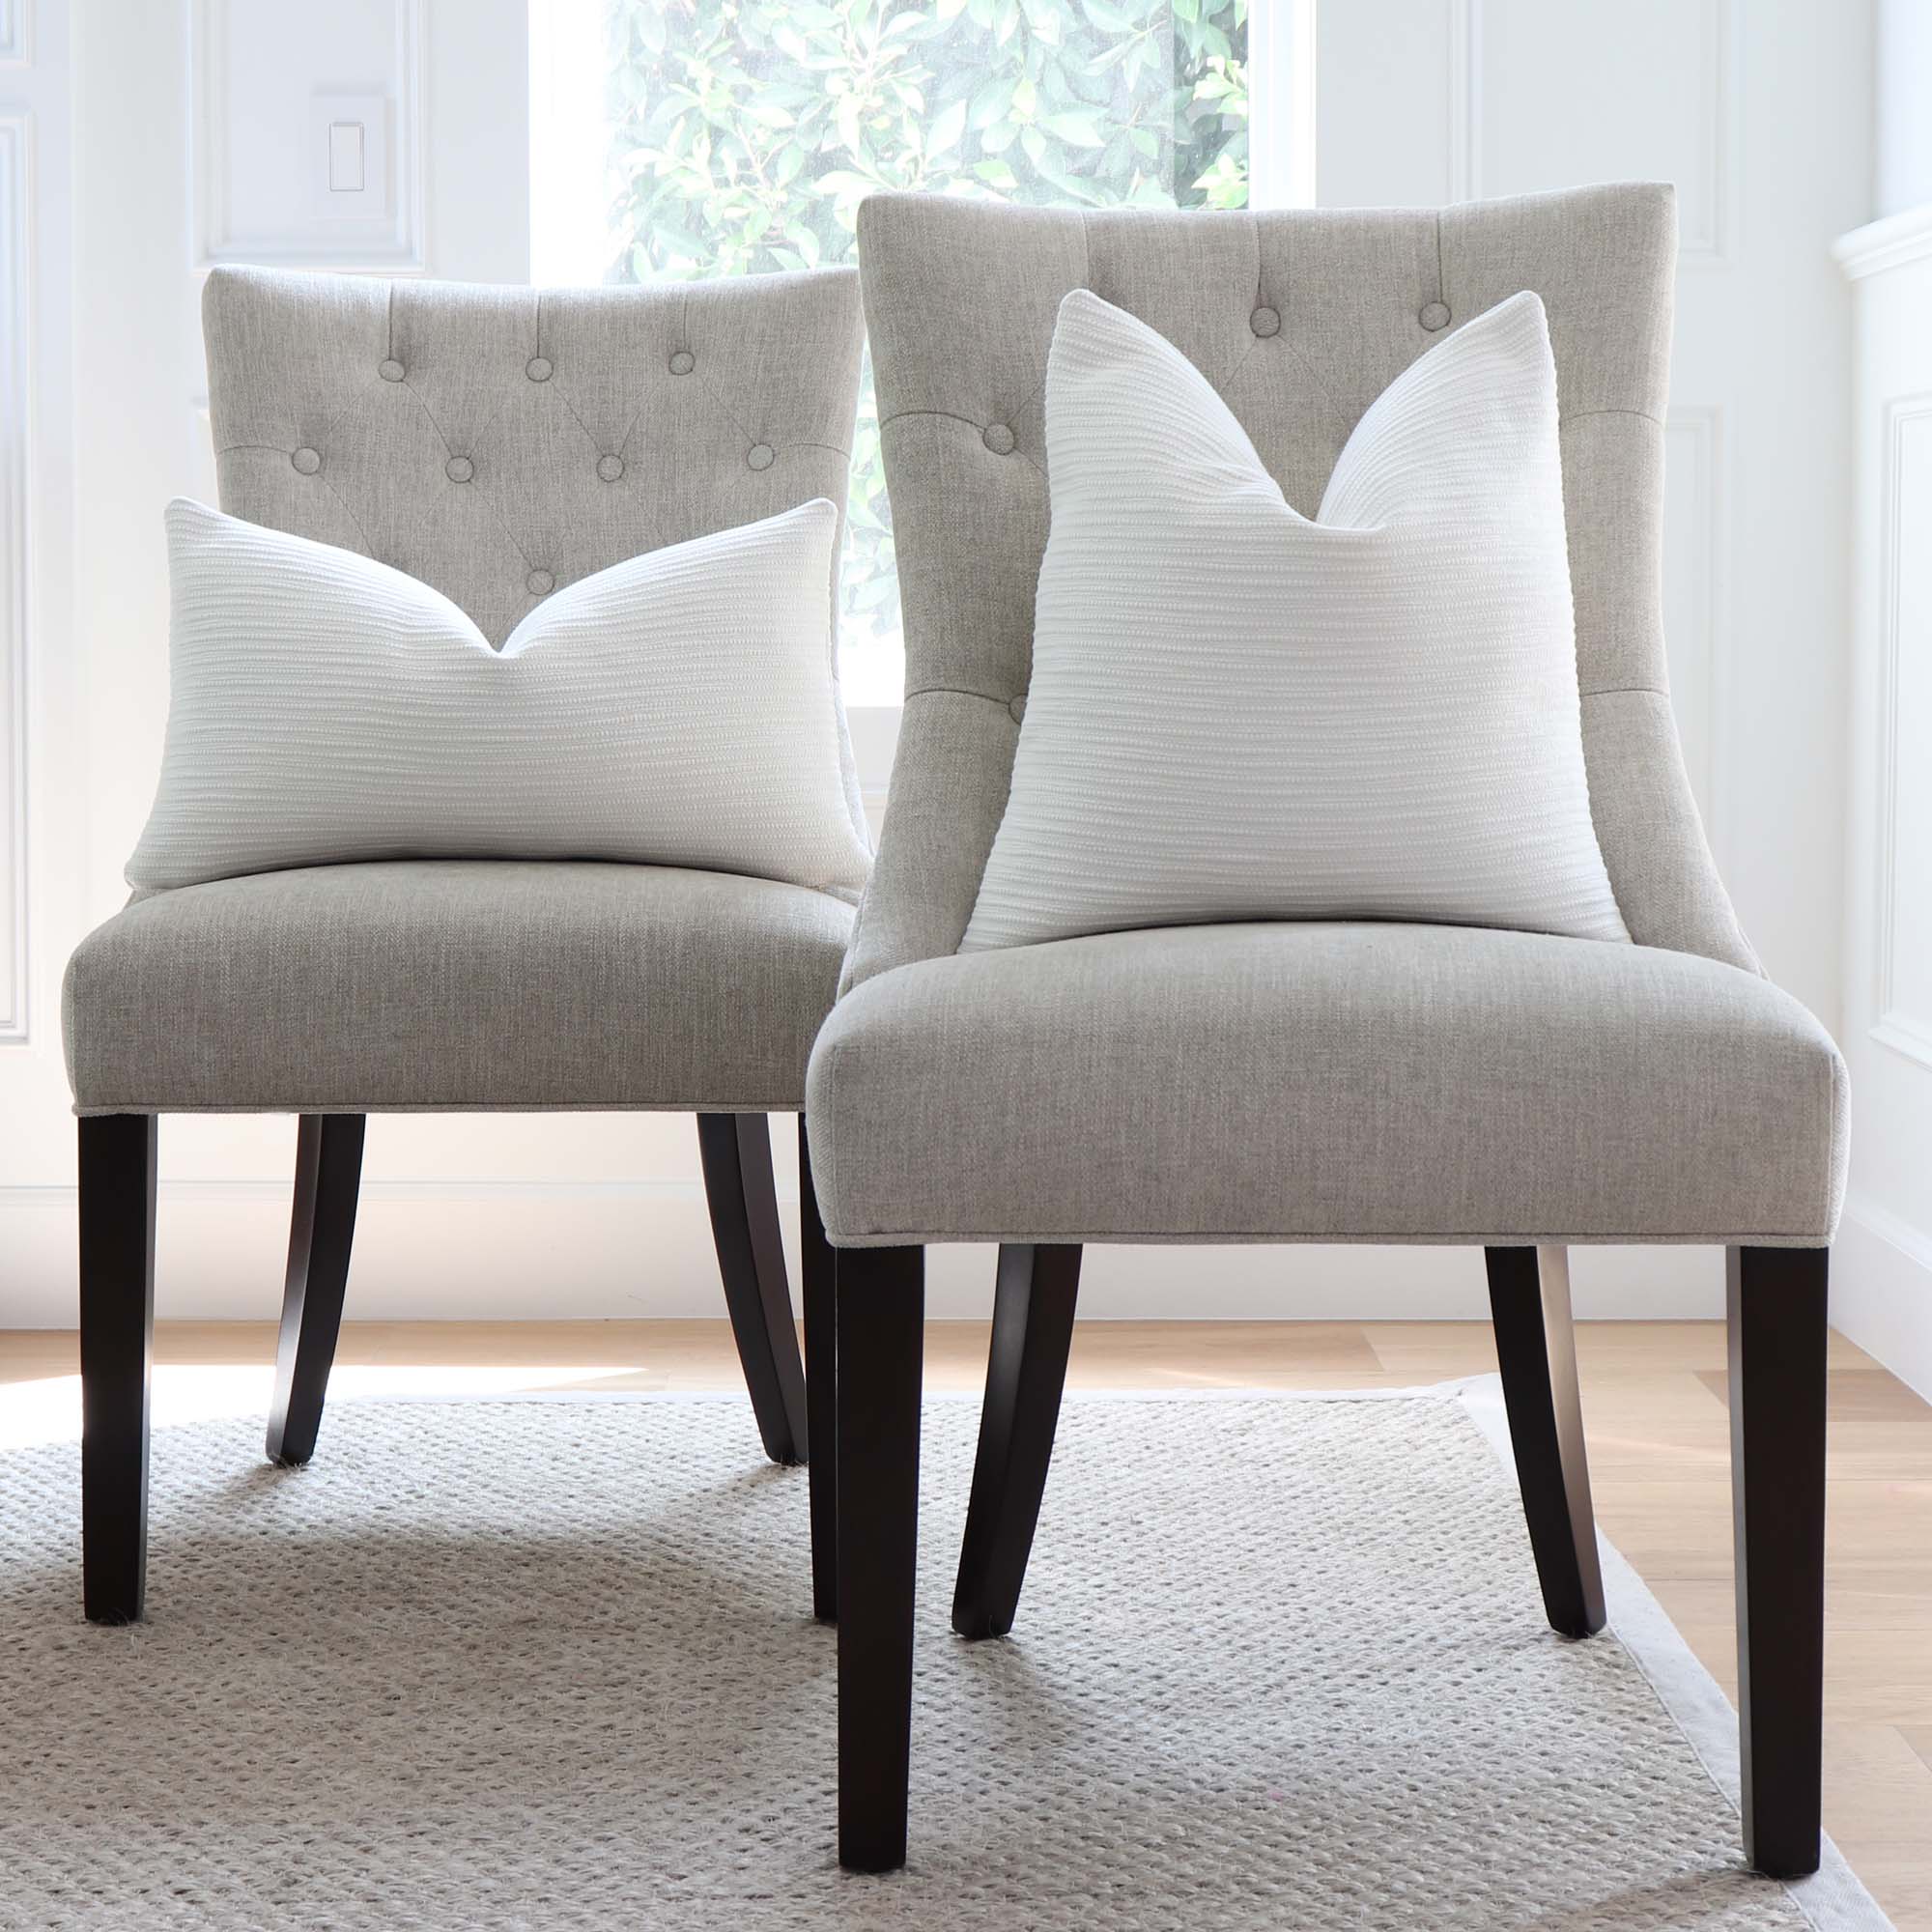 Zak + Fox Jibari Textured White Luxury Designer Throw Pillow Cover on Dining Chairs in Living Room